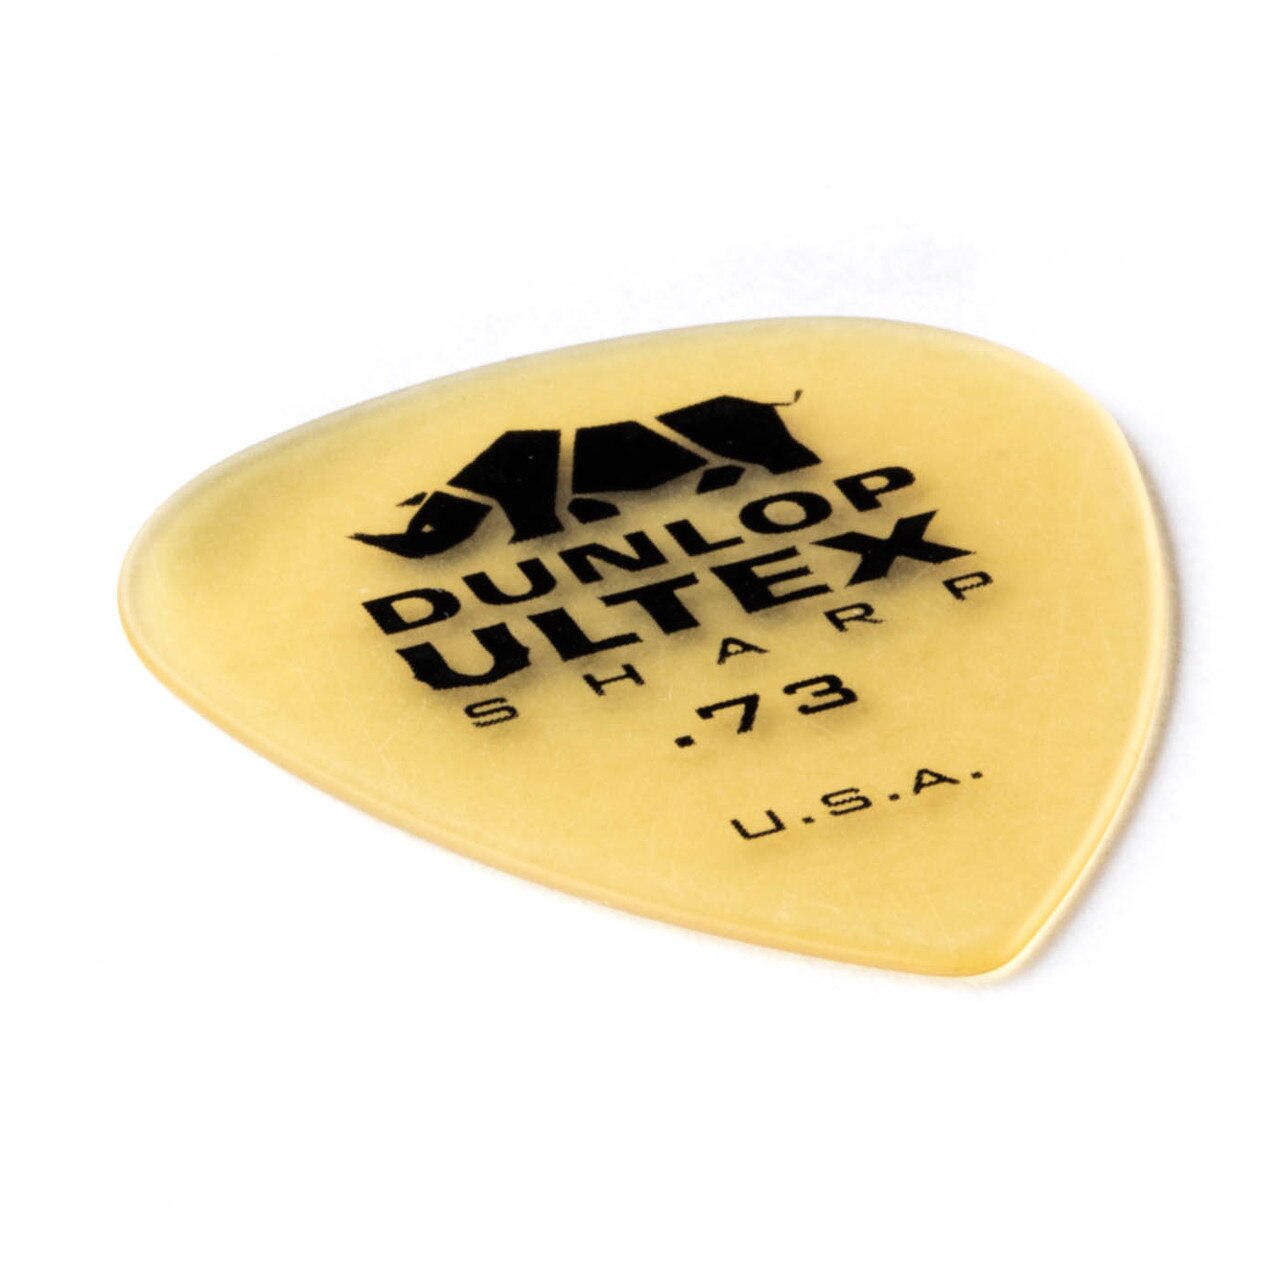 Jim Dunlop Ultex Sharp 433 0.73mm - Guitar pick - Variation 1